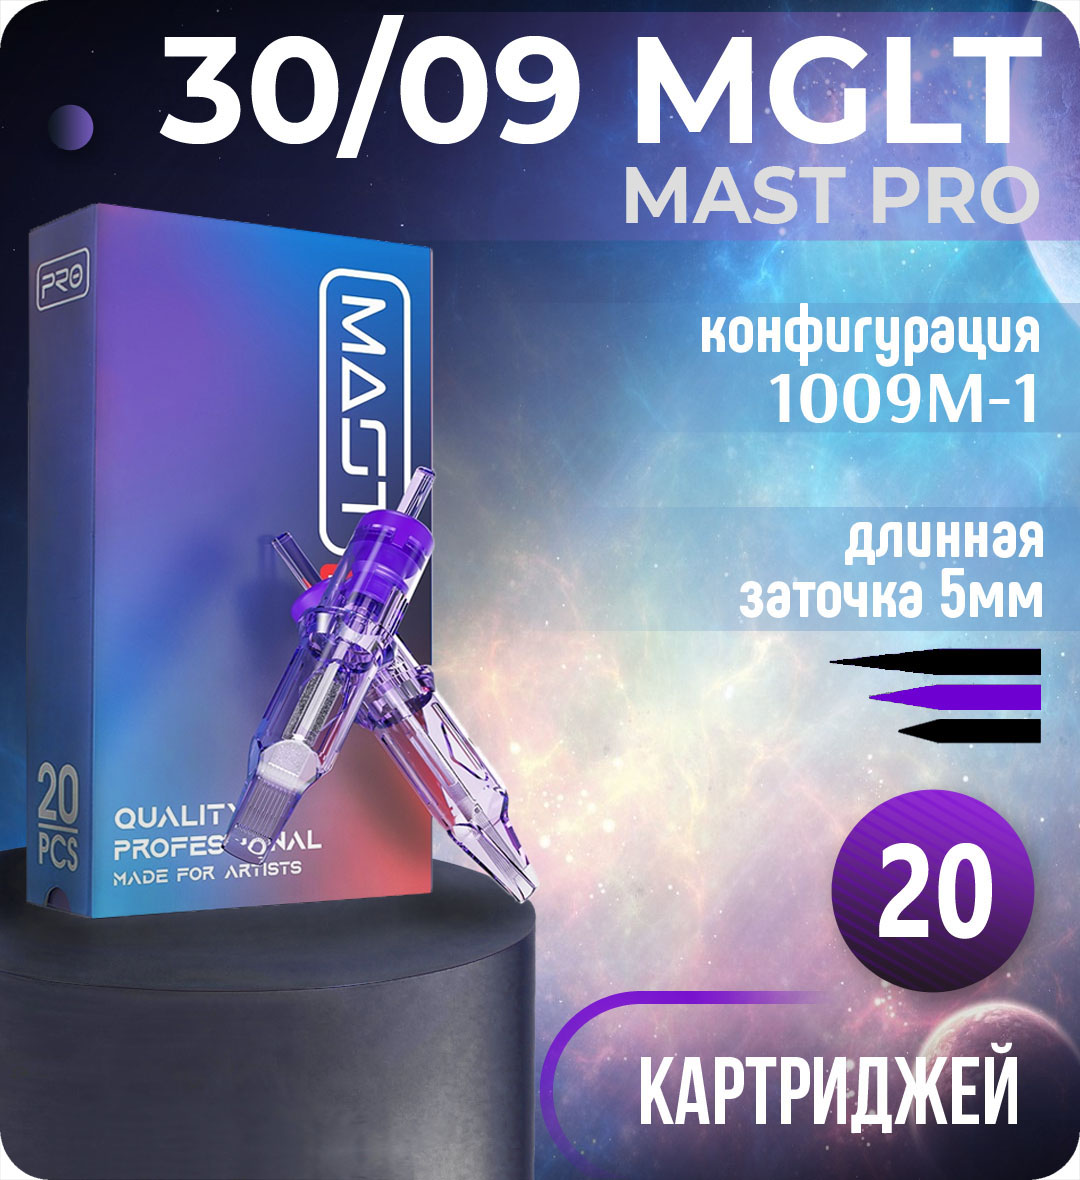 Картриджи Mast Pro 30/09 MGLT (1009M-1) для тату, перманентного макияжа и татуажа Dragonhawk 20шт